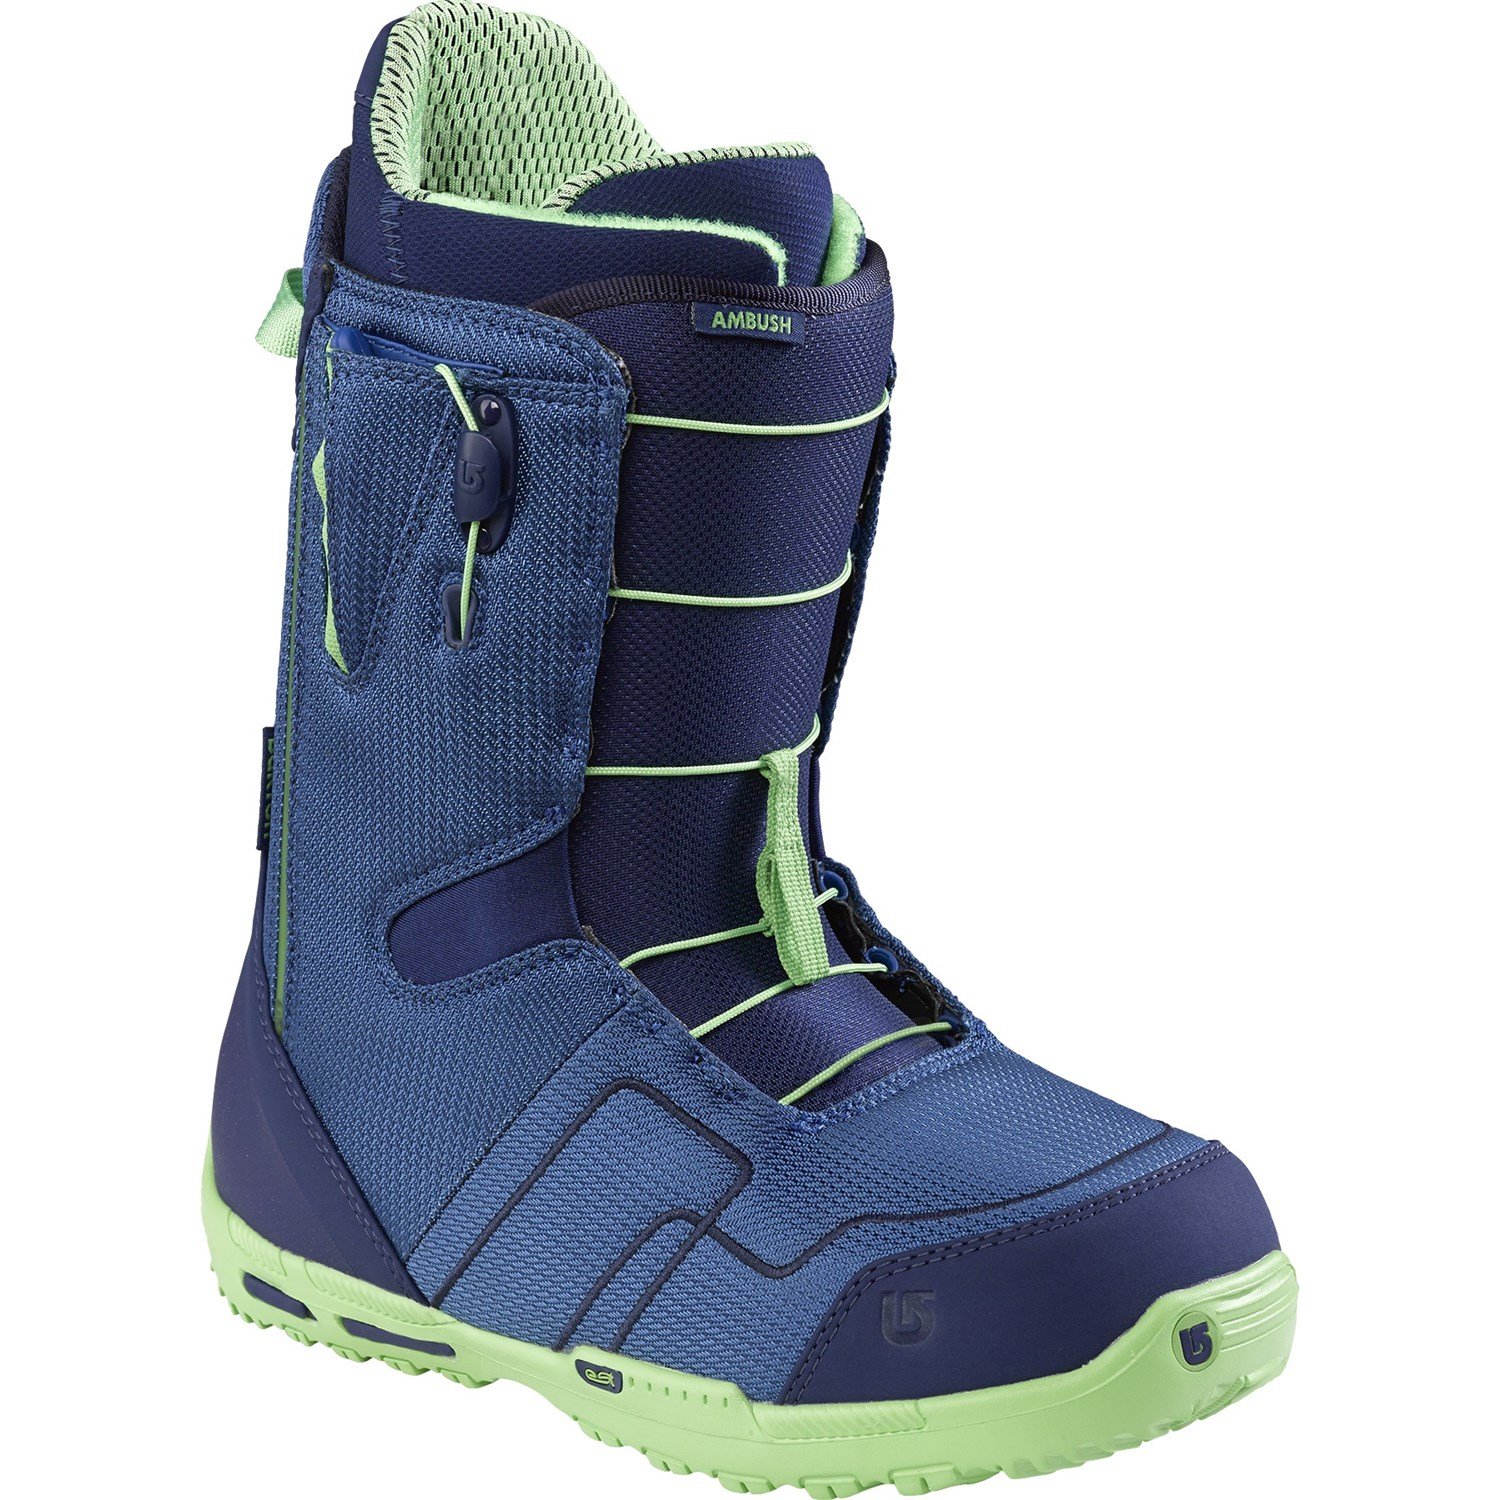 Burton Ambush Snowboard Boots 2015 | evo